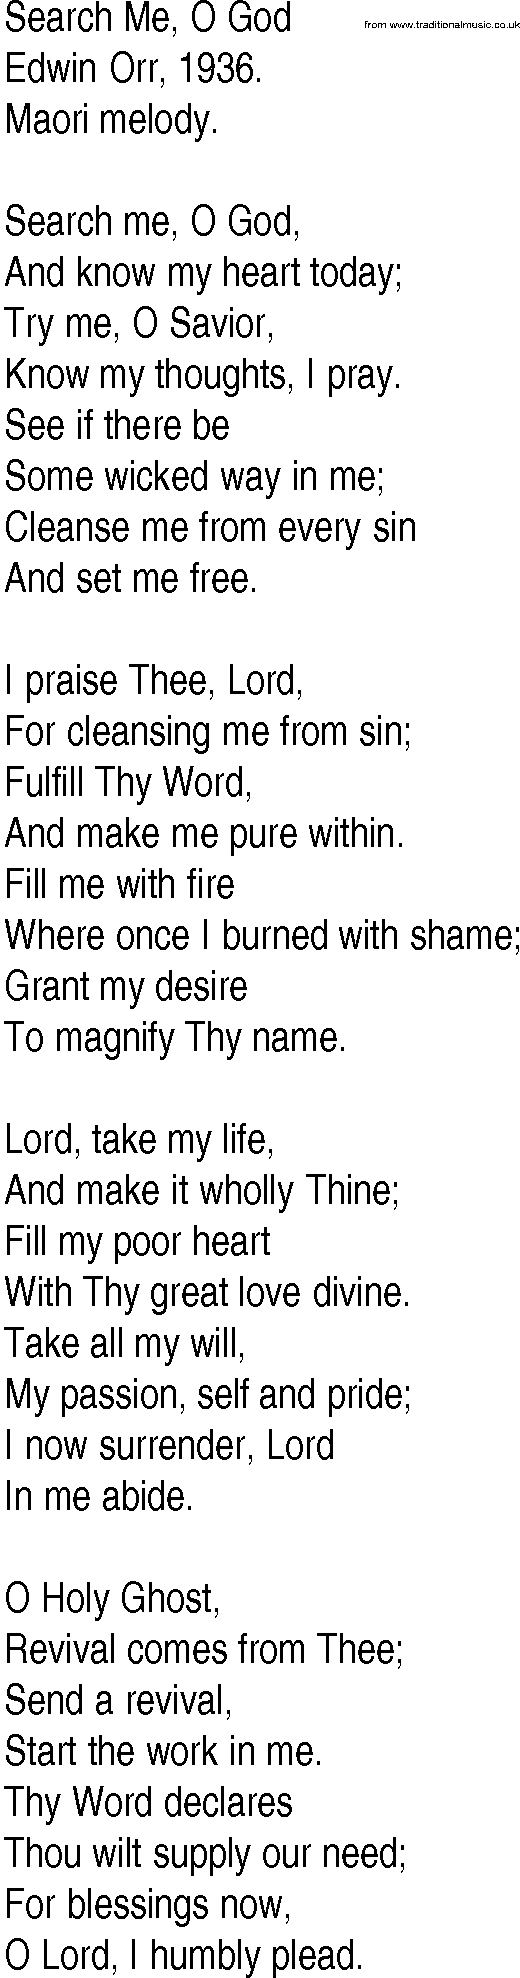 Hymn and Gospel Song: Search Me, O God by Edwin Orr lyrics